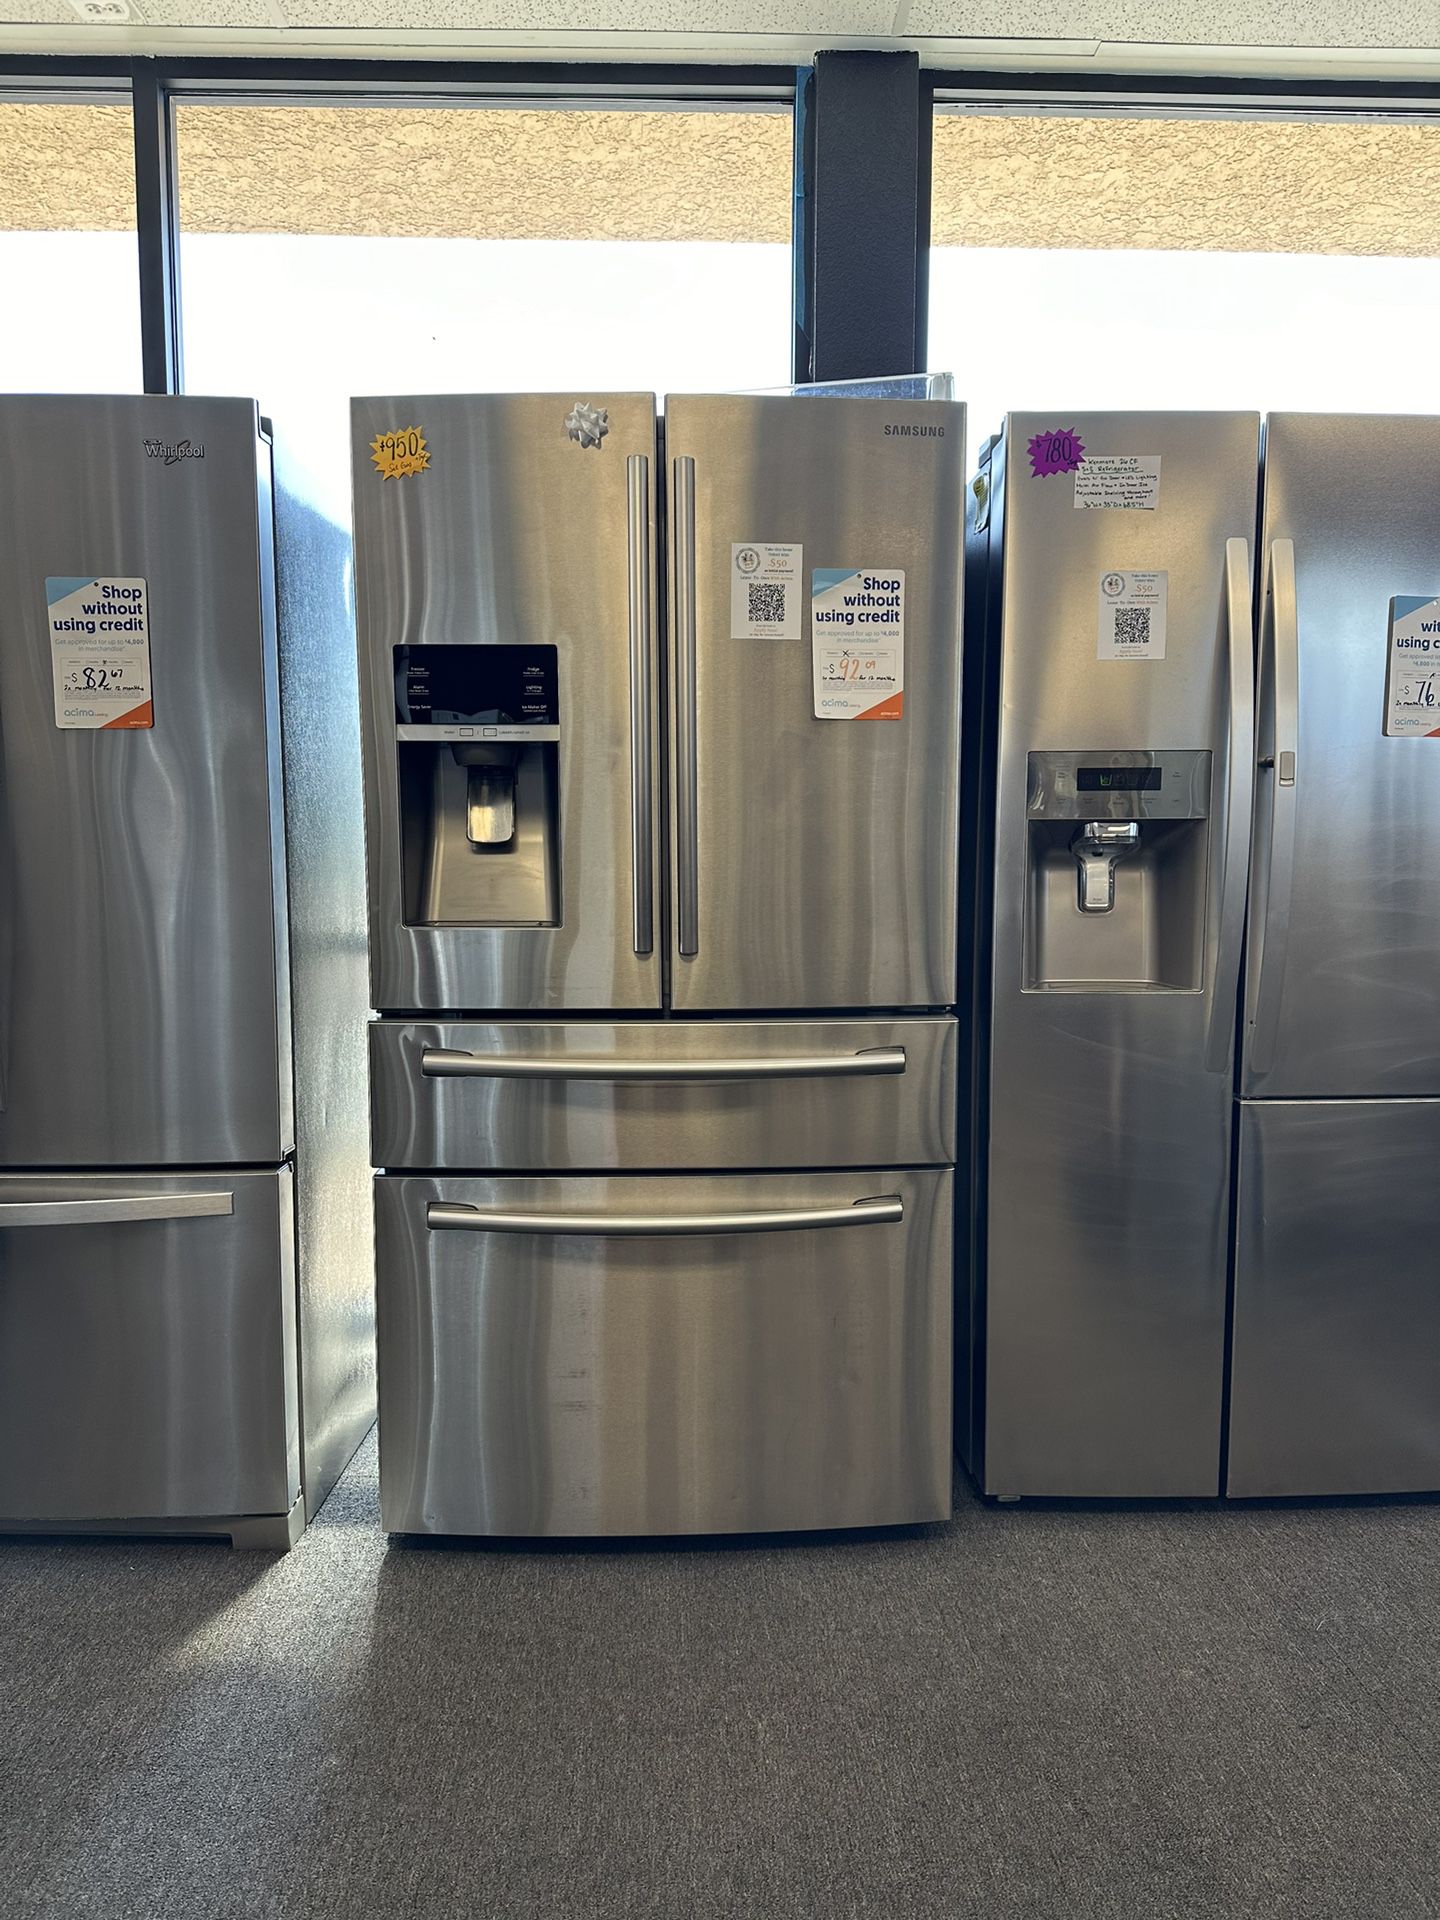 Large 28CF Samsung Refrigerator